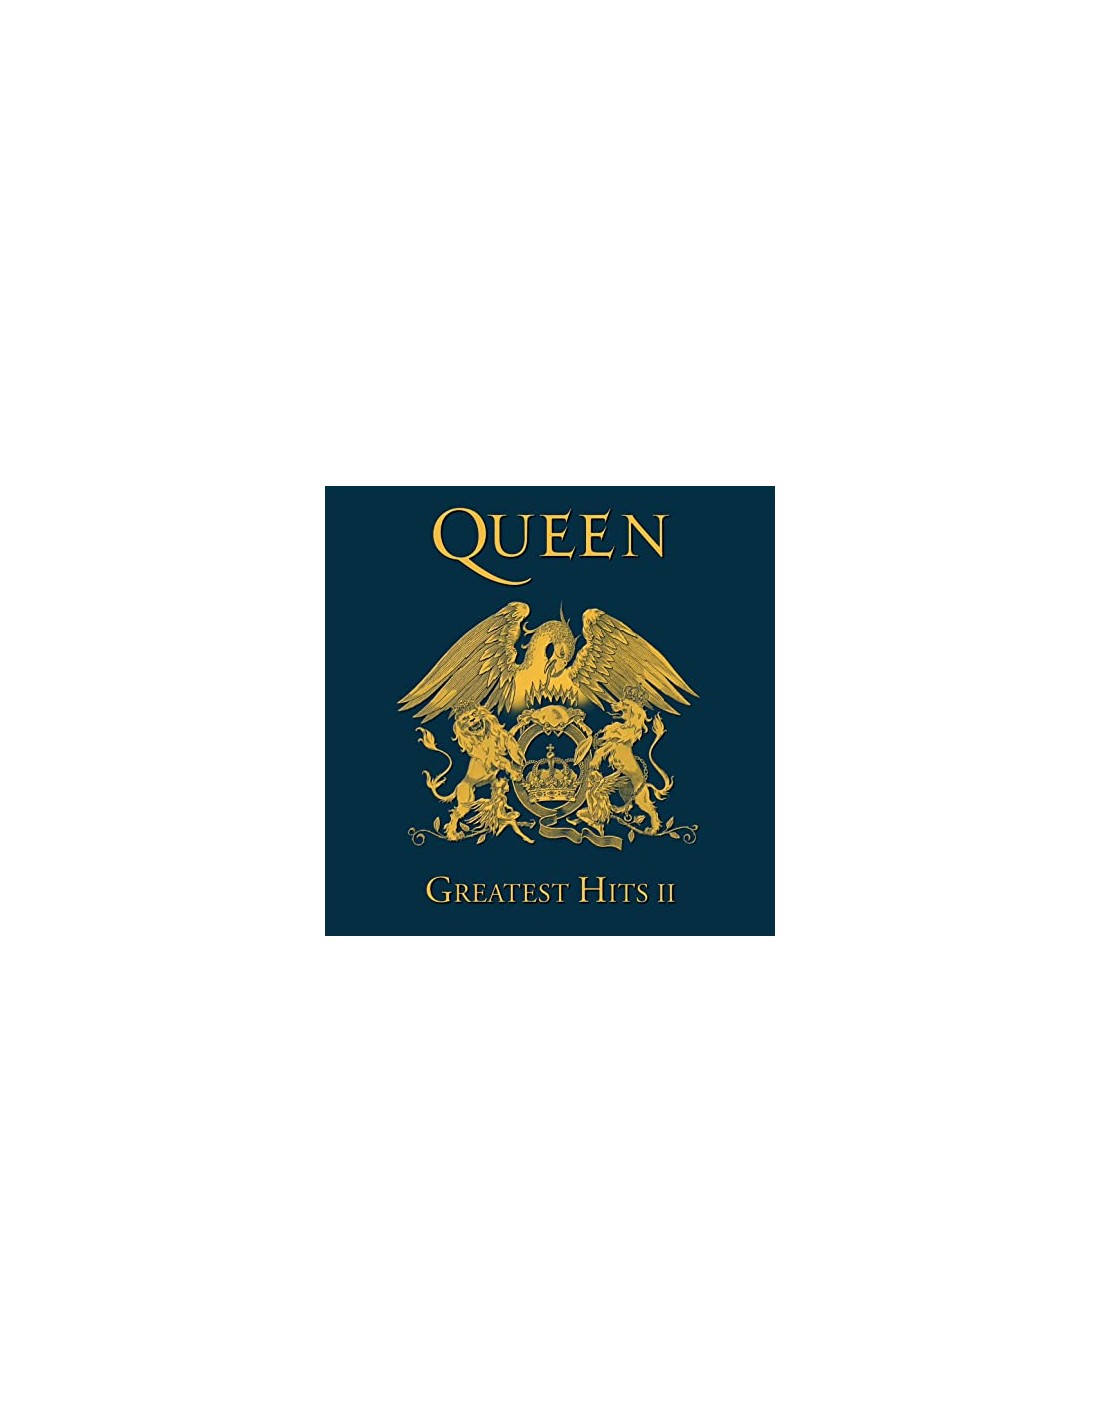 Queen Greatest Hits Ii 2 LP VINILE